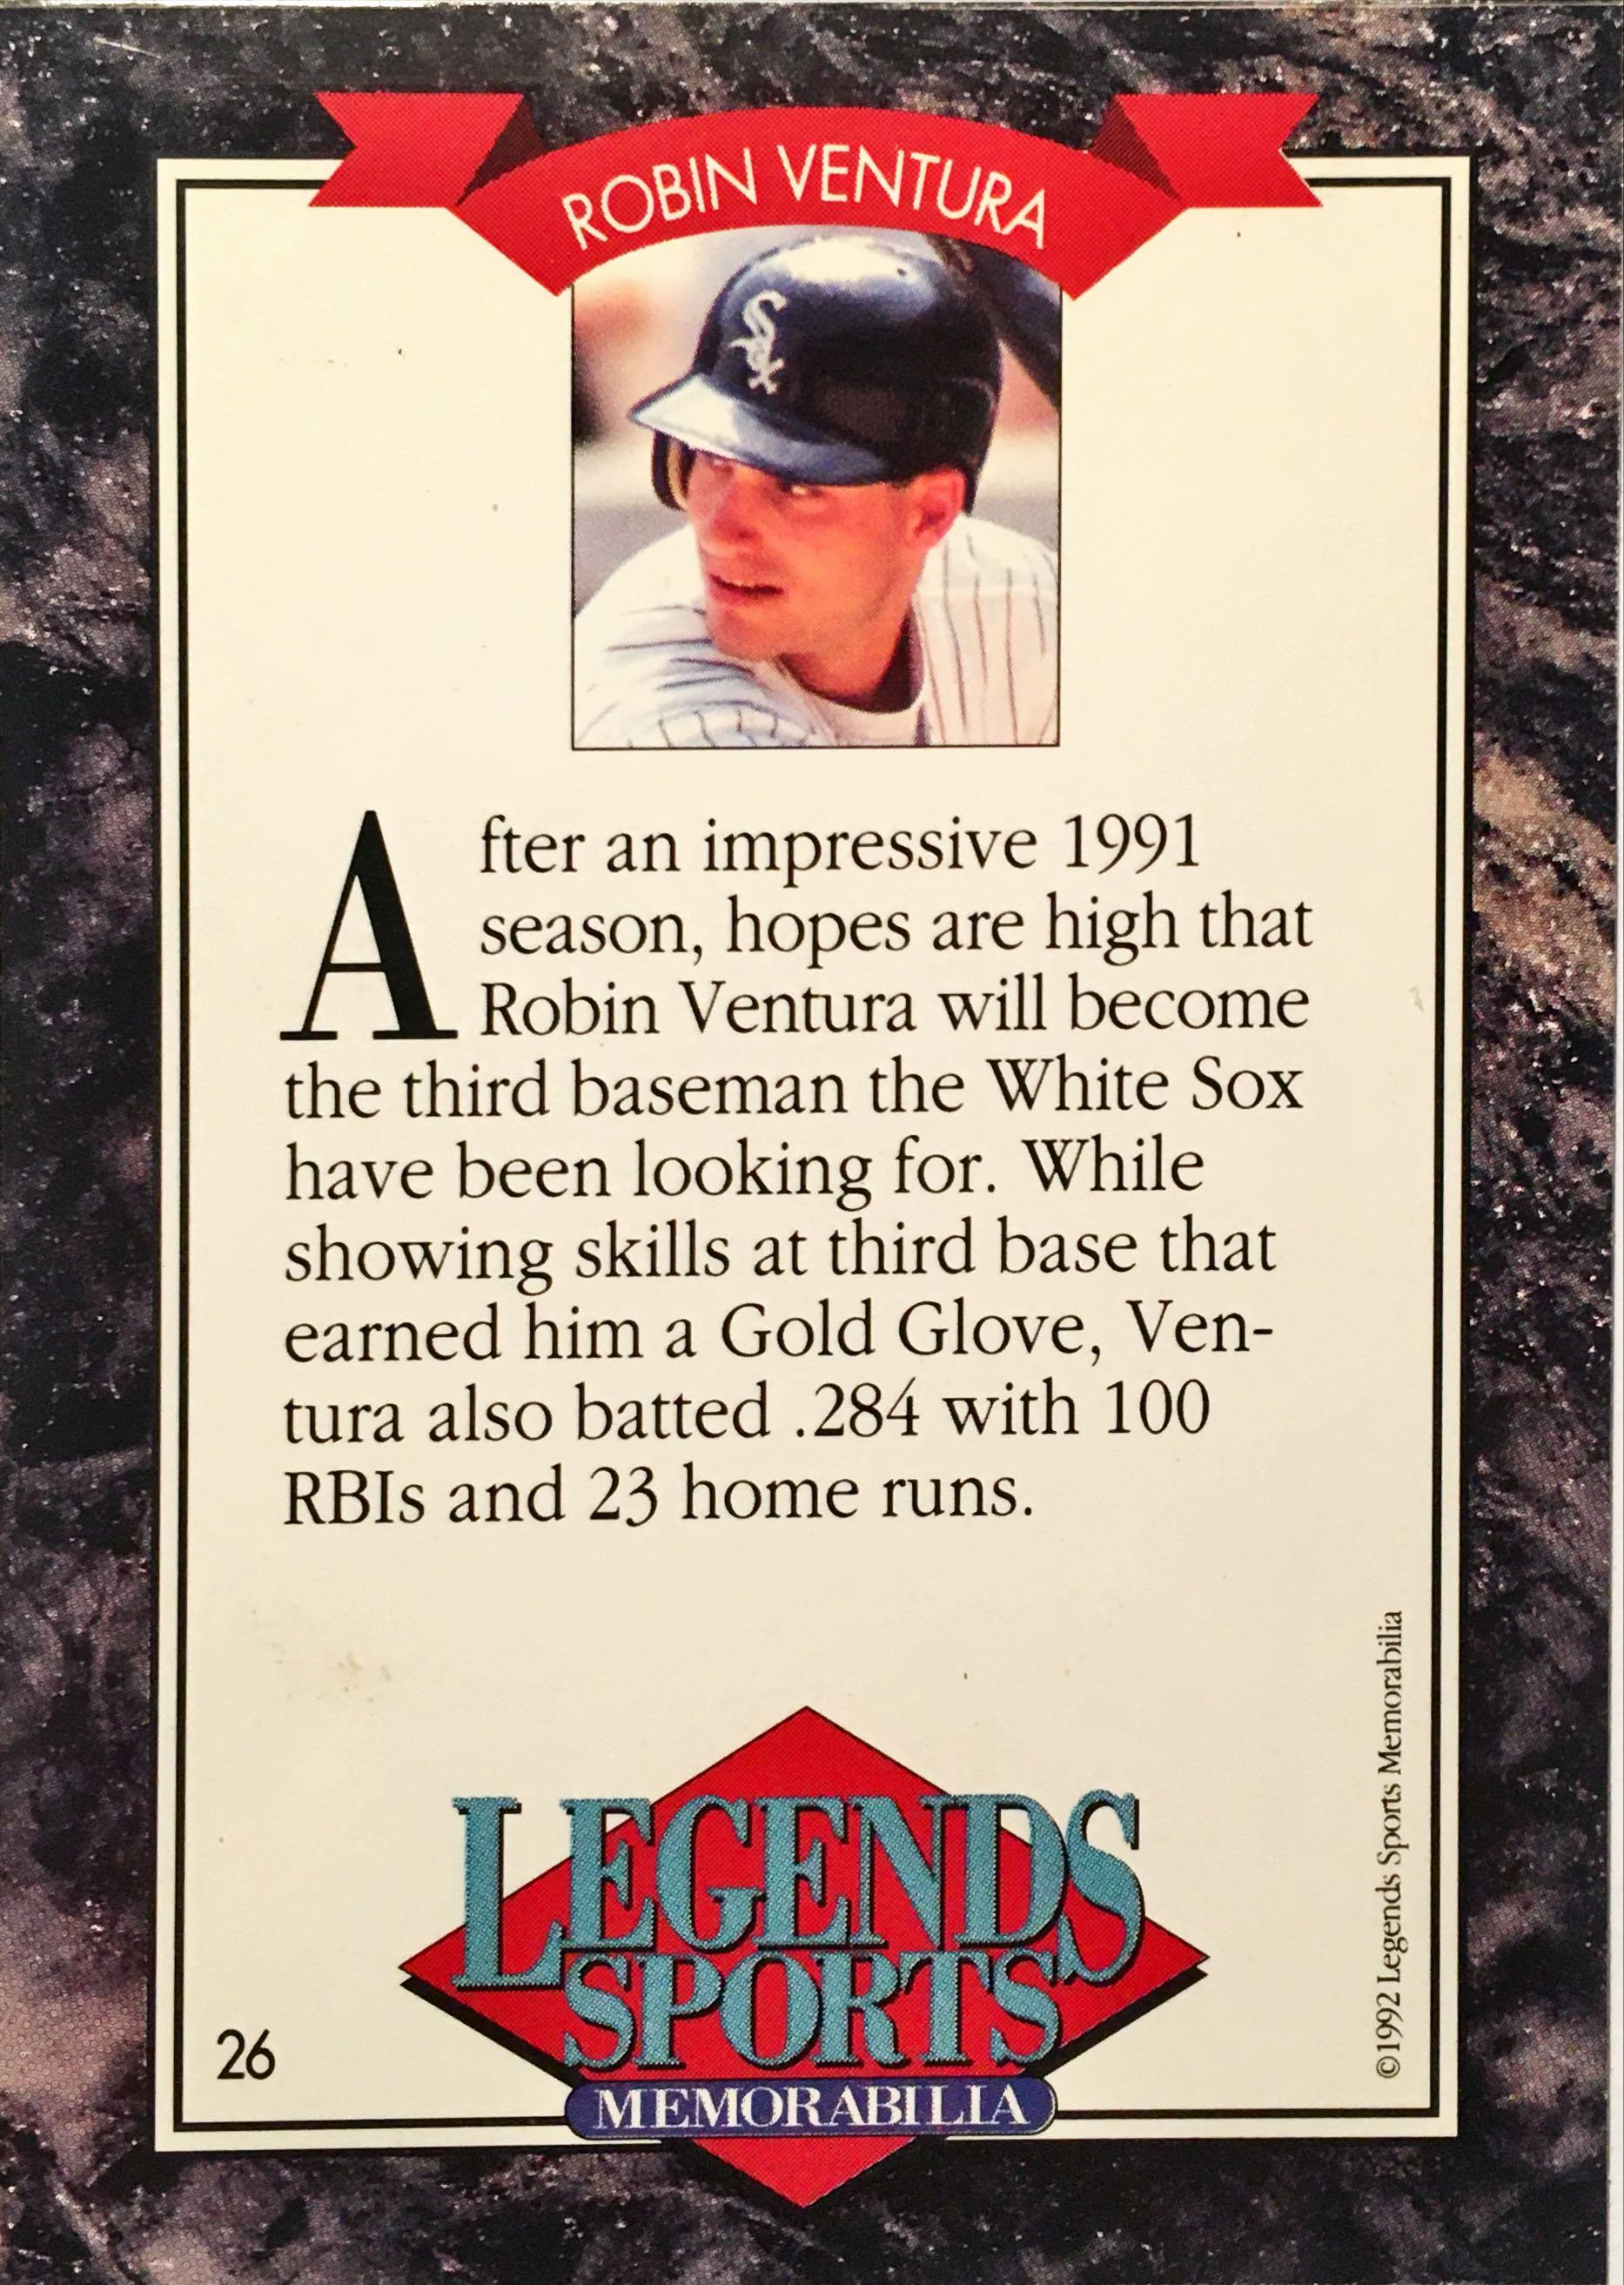 1992 Legends Sports Memorabilia  26 back image